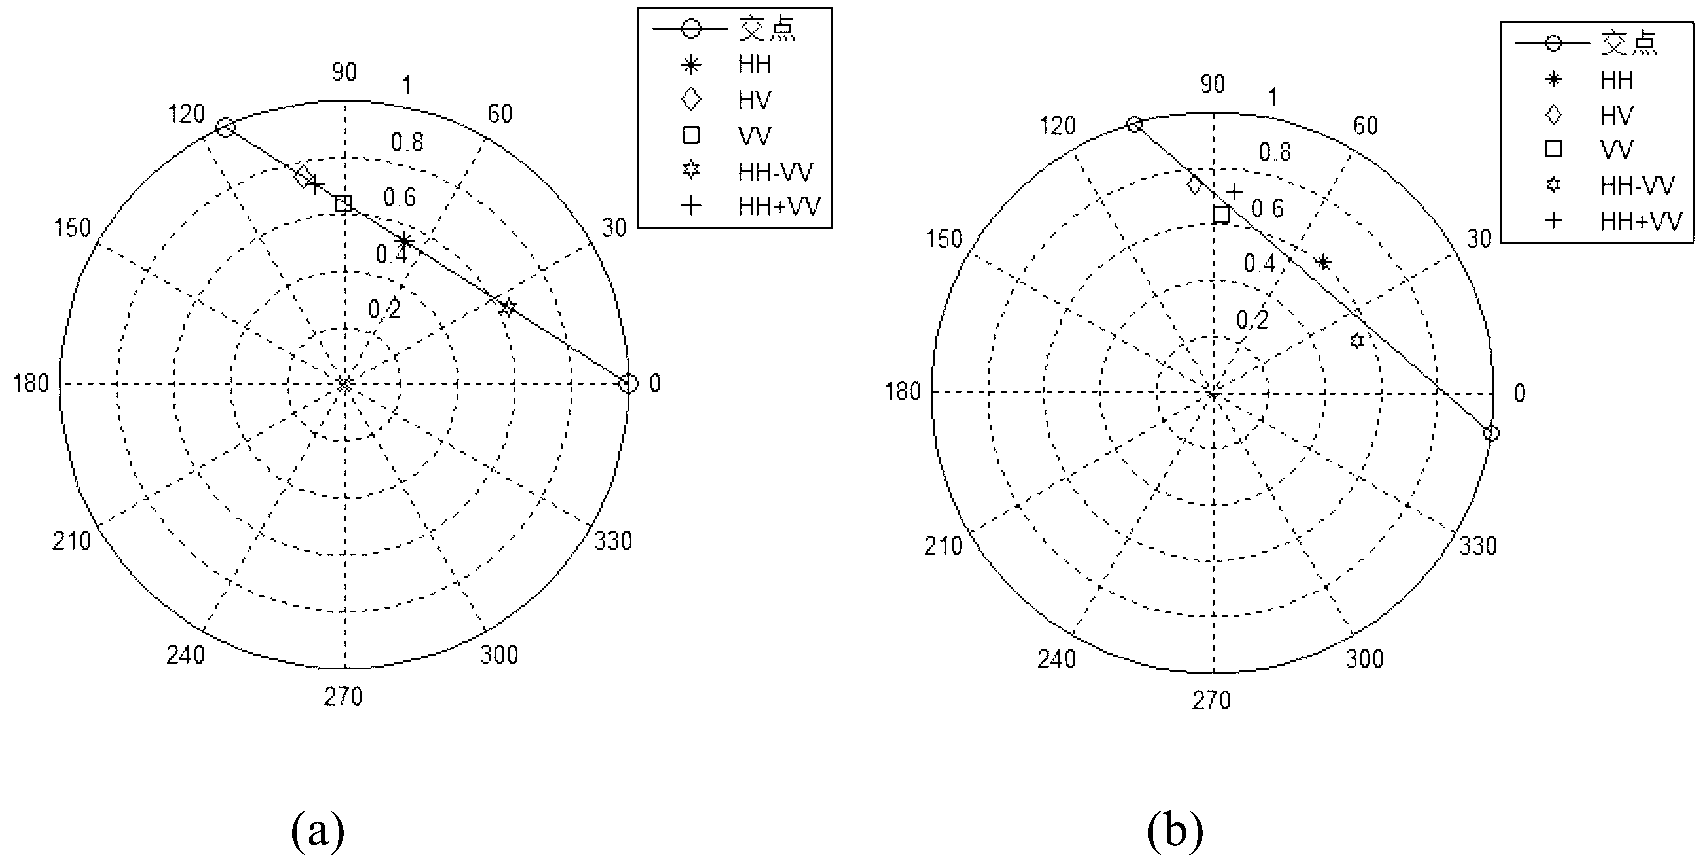 Polarimetric synthetic aperture radar interferometry (POLInSAR) vegetation height inversion method based on complex field adjustment theory